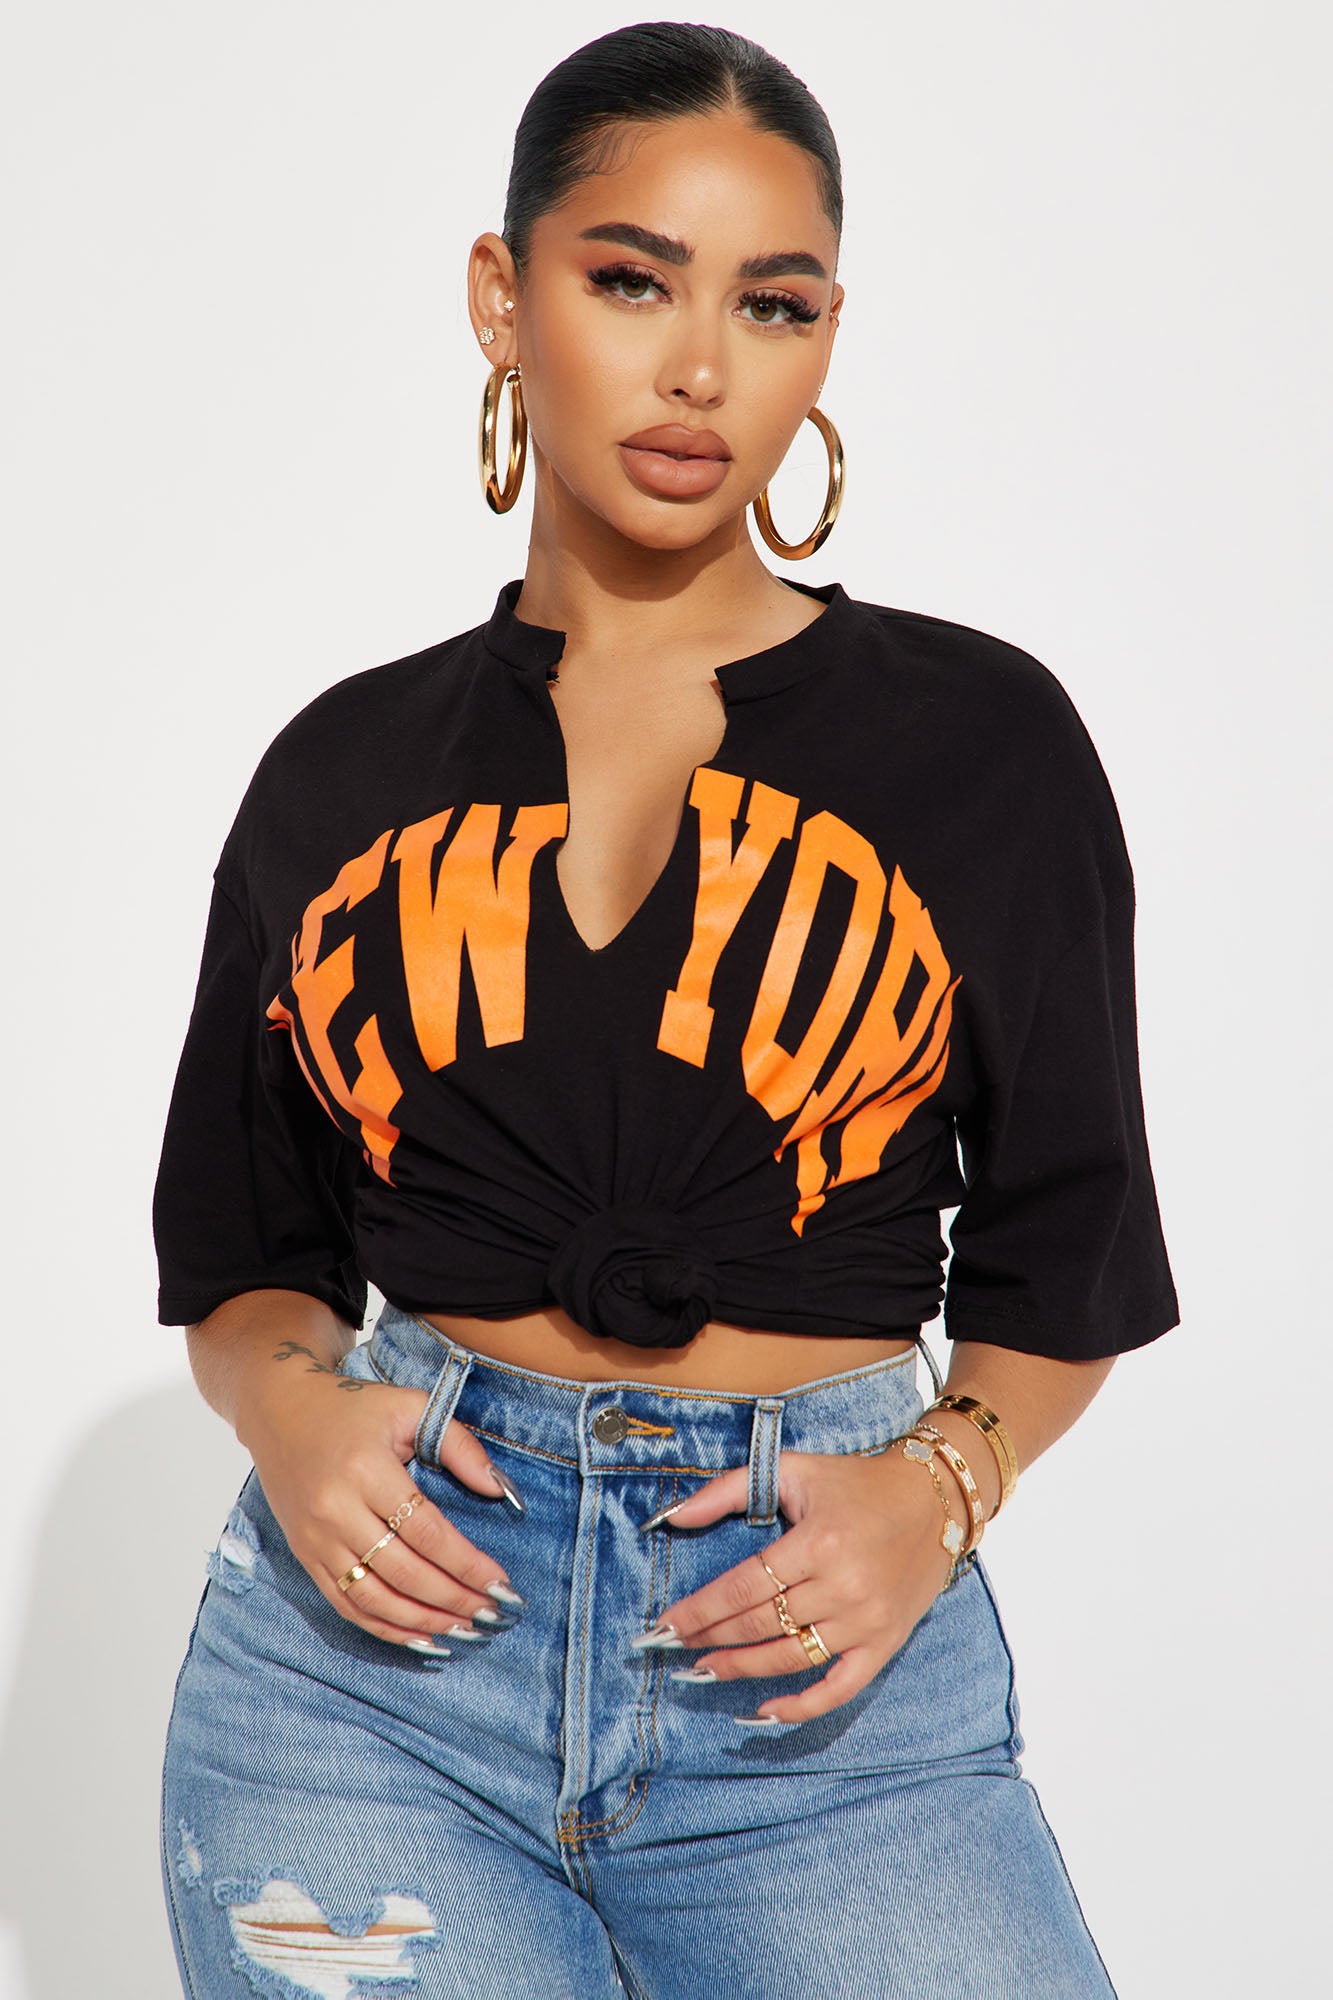 Women's New York Girl T-Shirt in Black/Orange Size Large by Fashion Nova